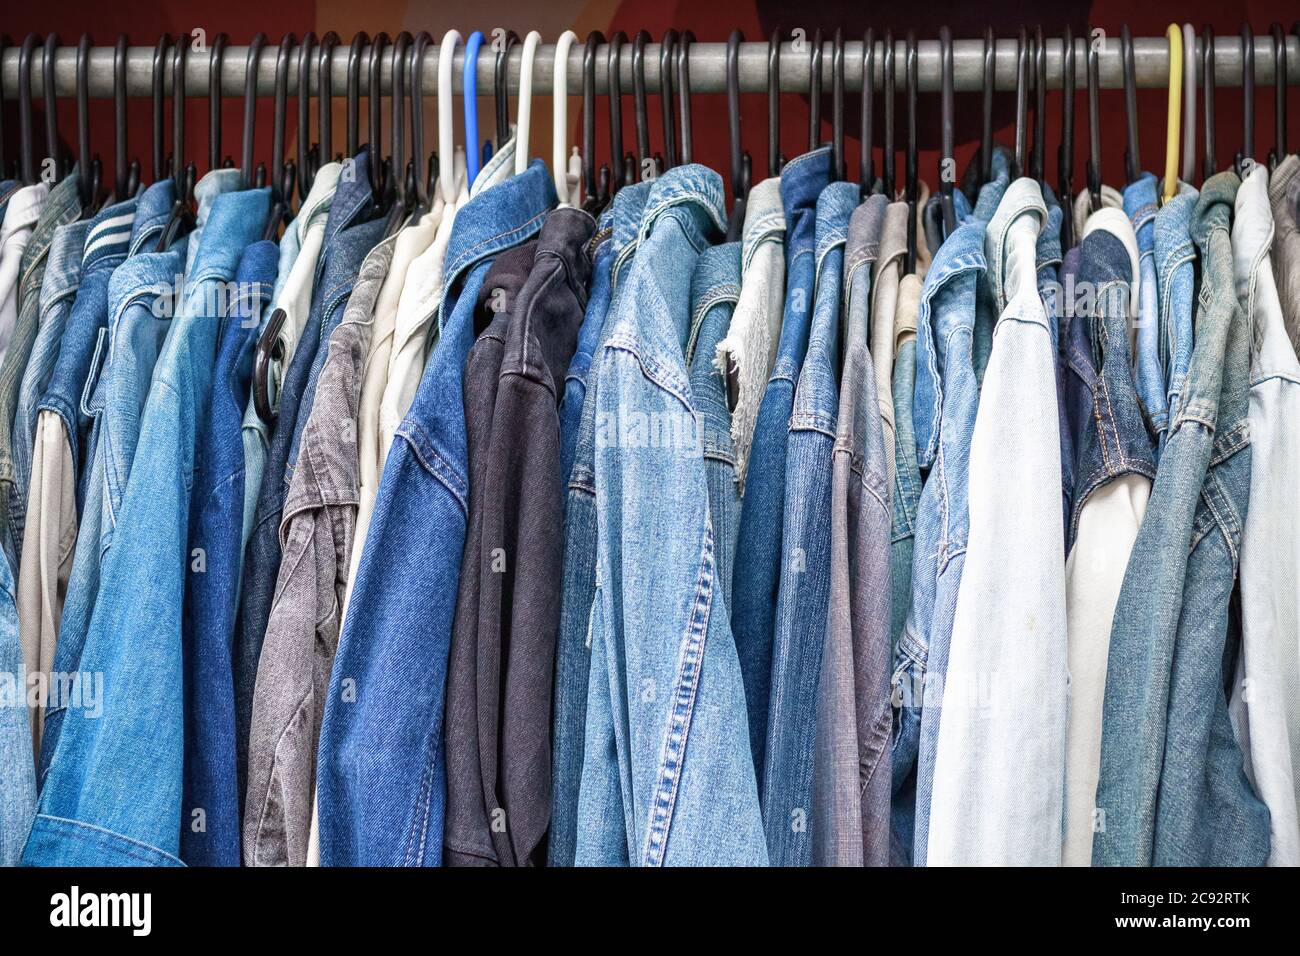 Rack of denim jackets on display at Camden market in London Stock Photo